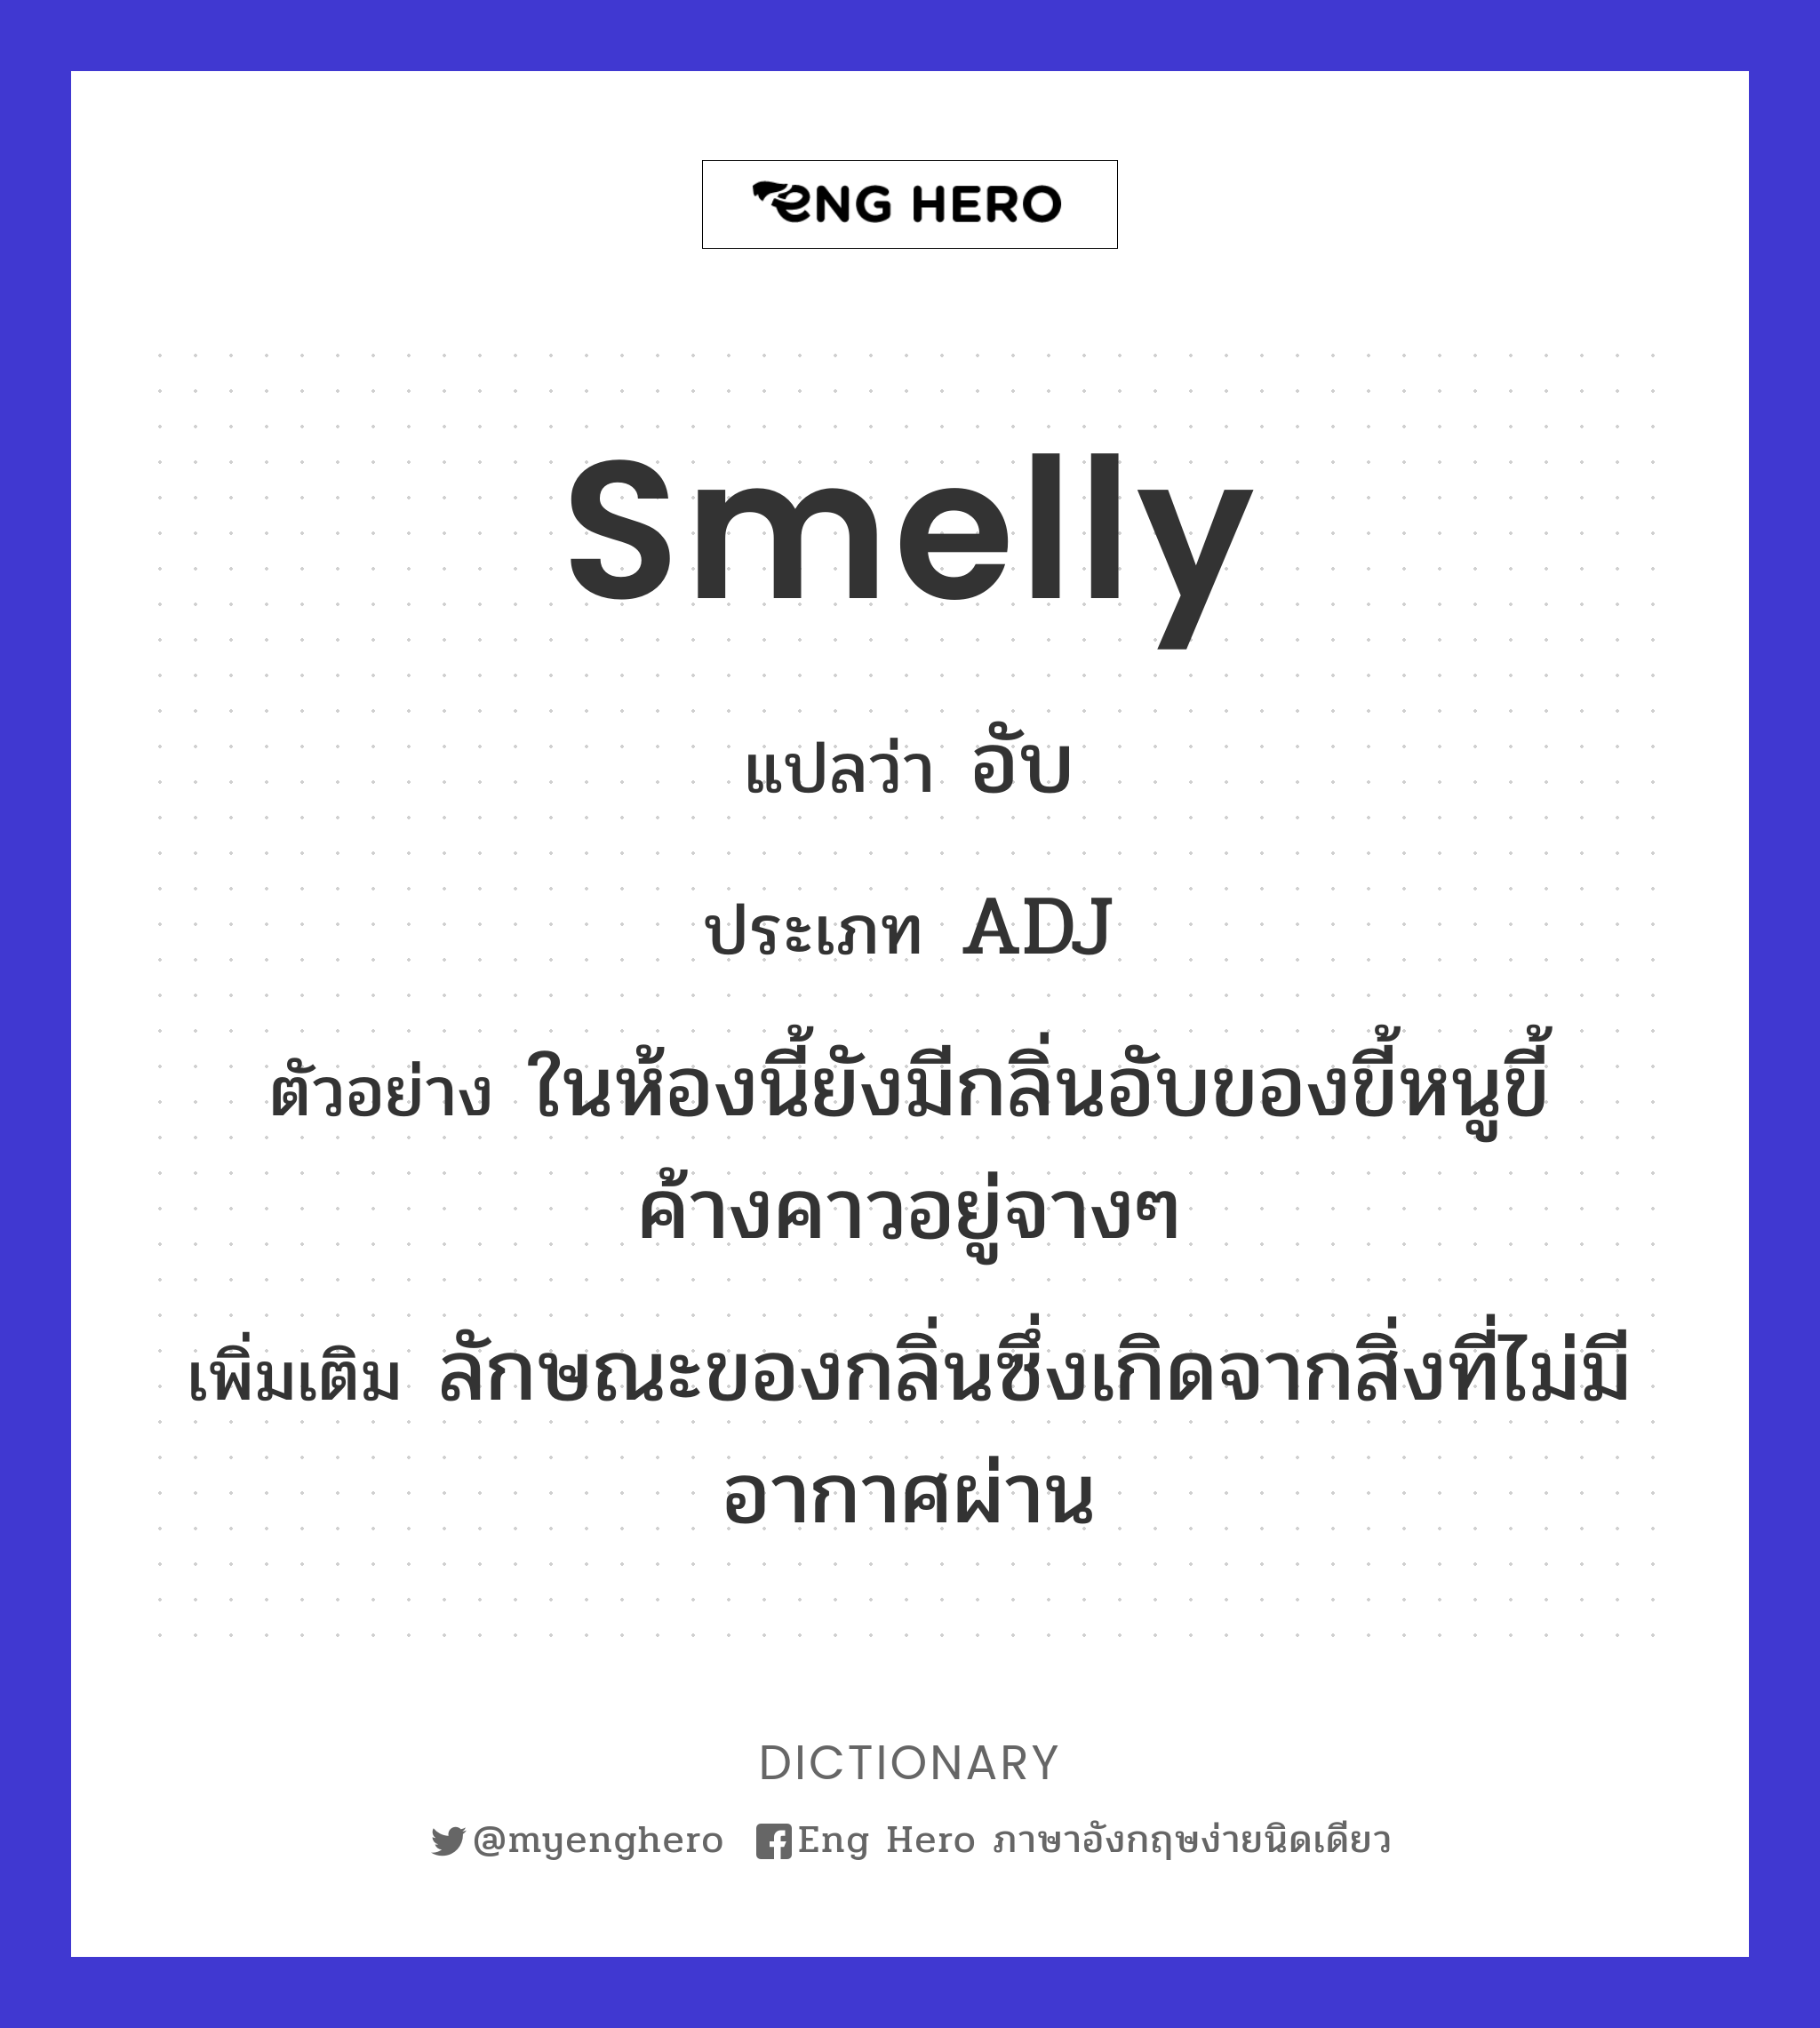 smelly